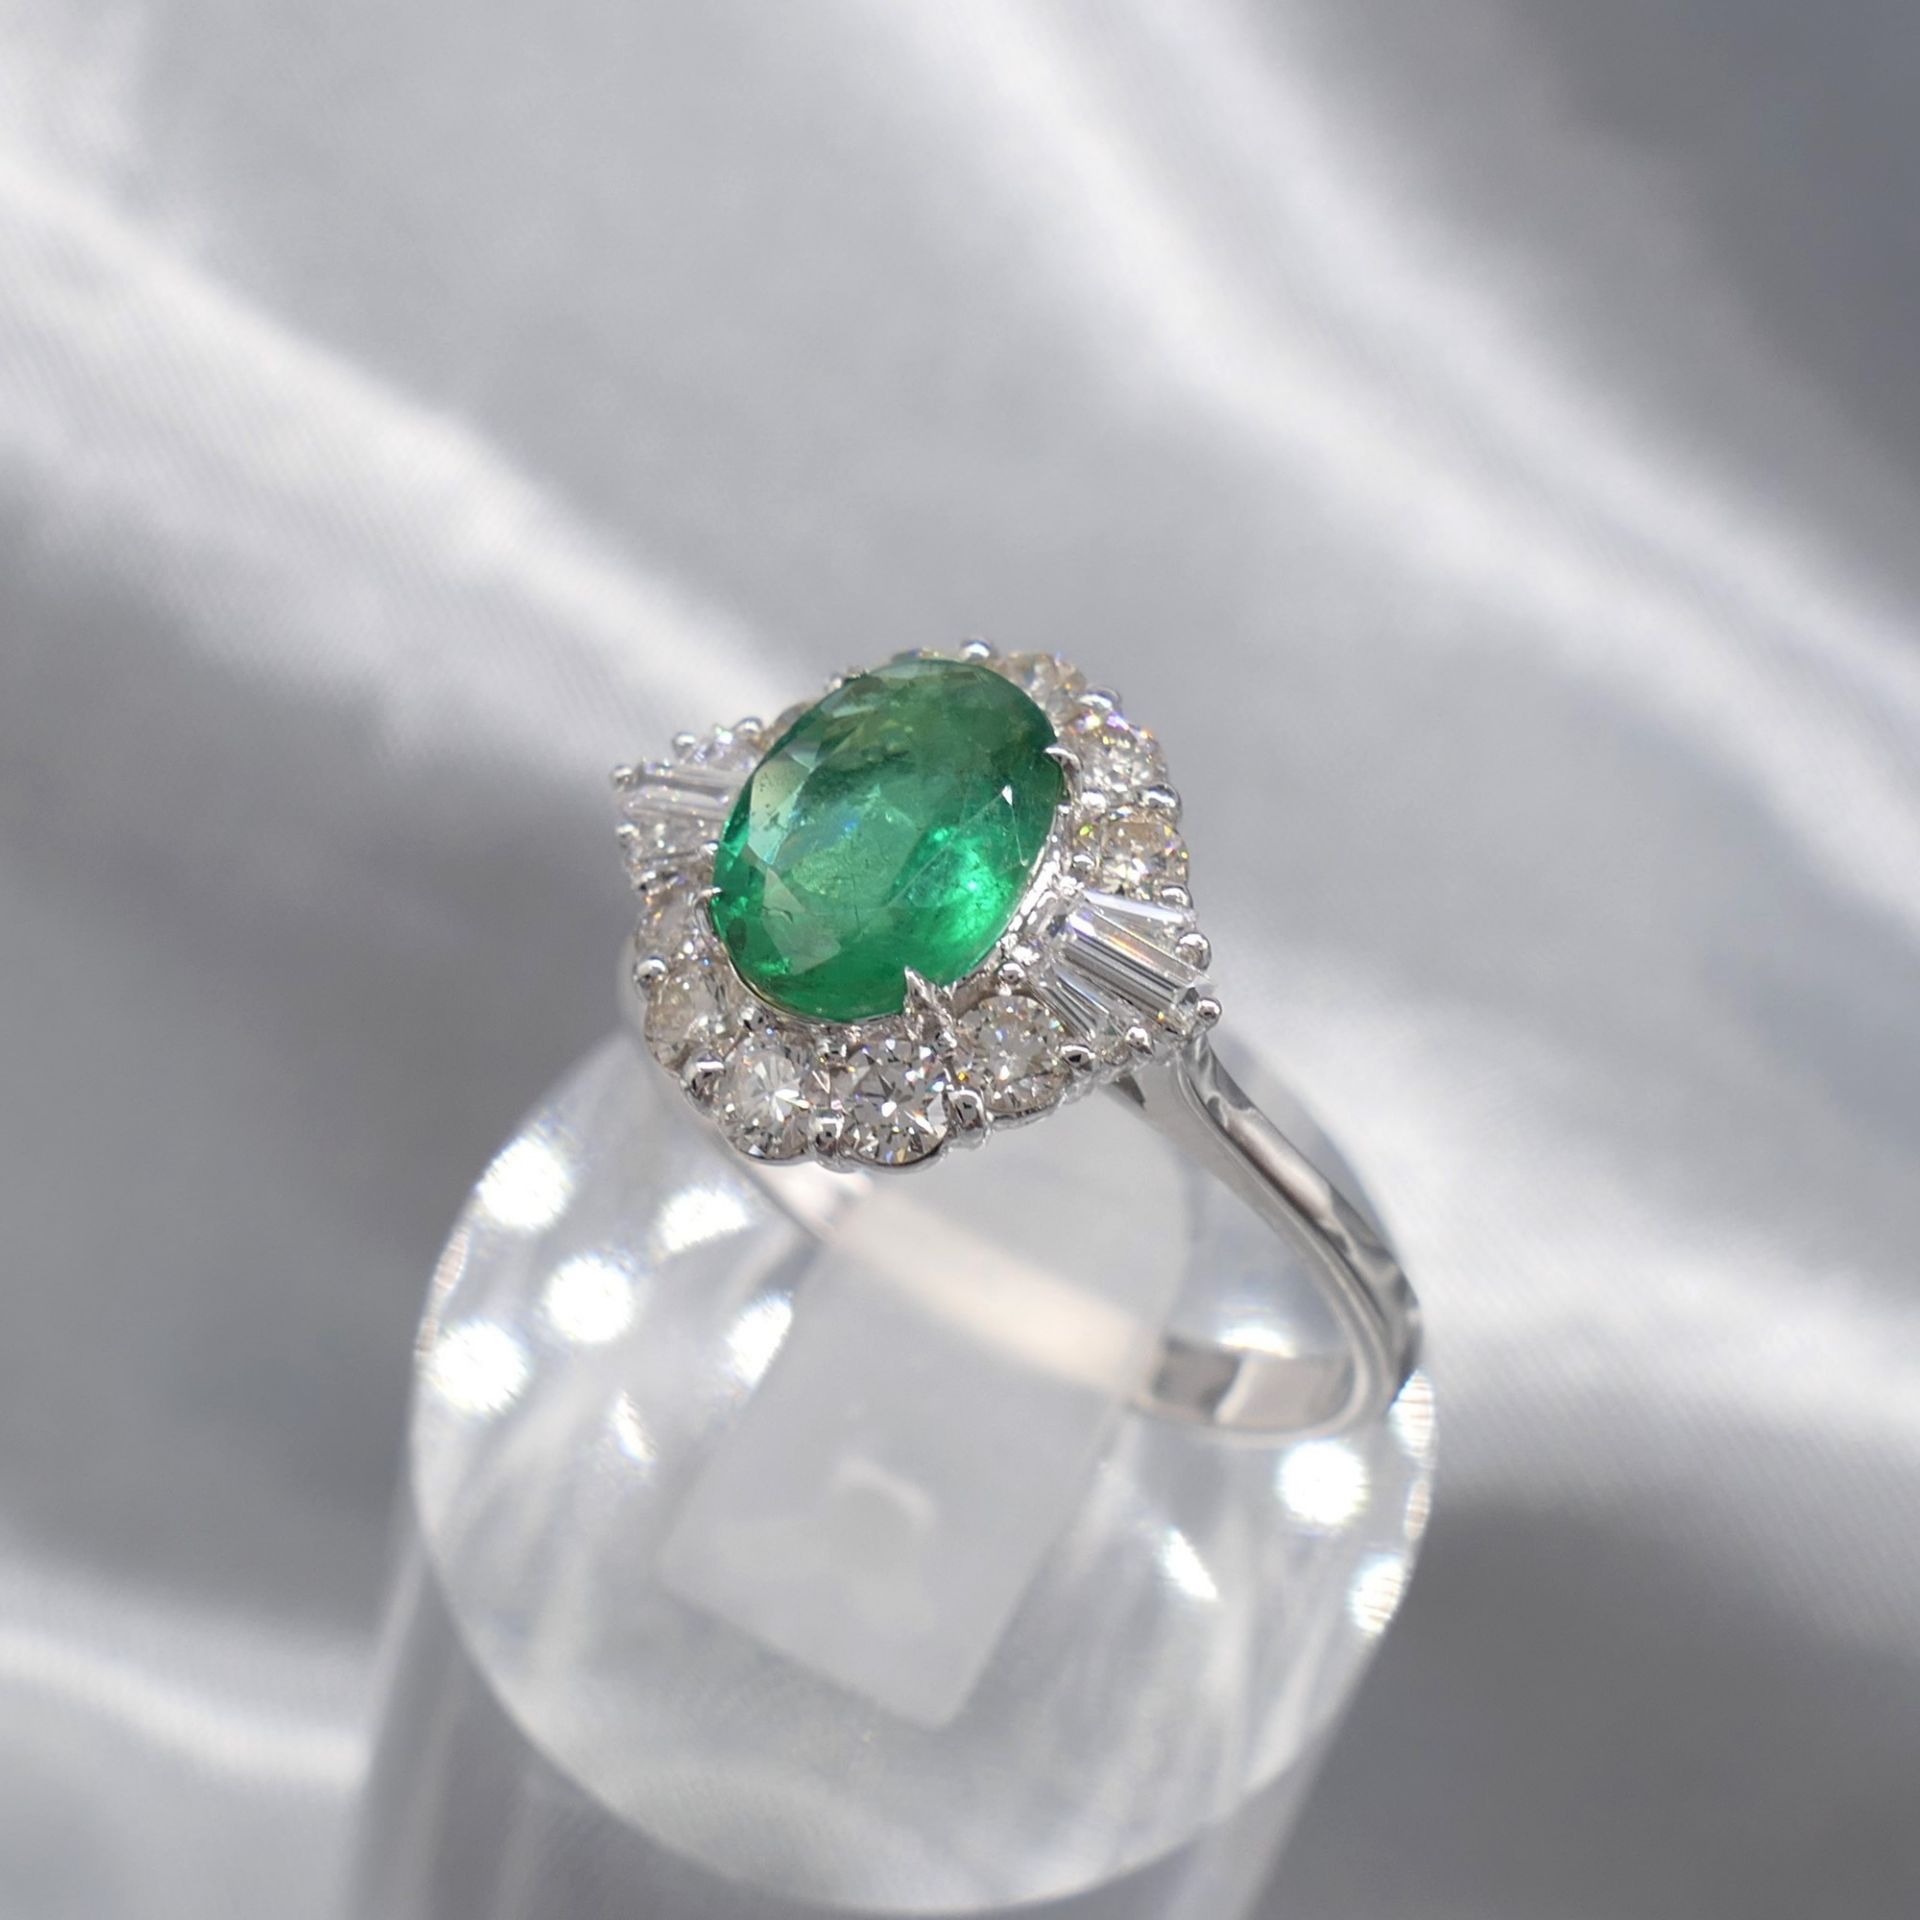 Stylish 1.05 Carat Emerald and Diamond Dress Ring In 18 Carat White Gold - Image 3 of 8